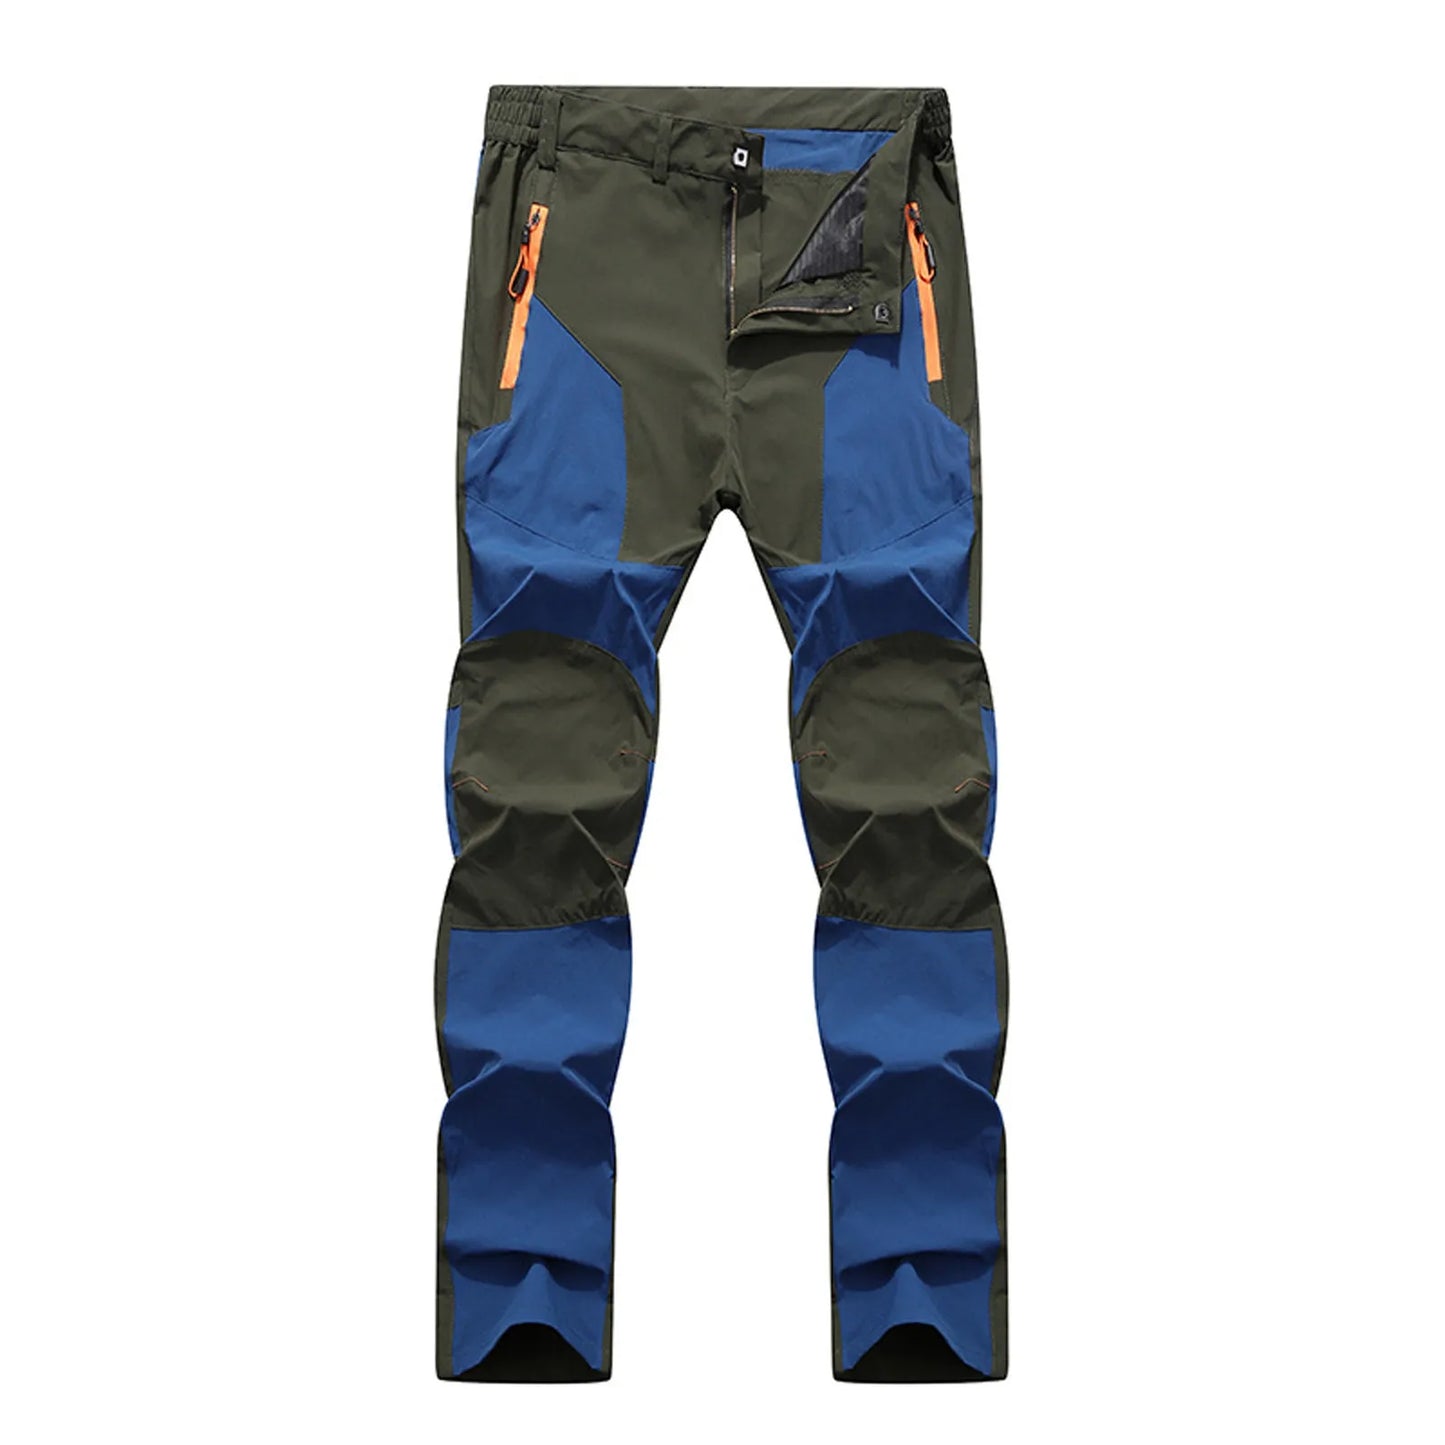 4 Season Casual Hiking Pants Fashion Men Keep Warm Fishing Pants Outdoors Sports Tactical Waterproof Mountain Trekking Pants